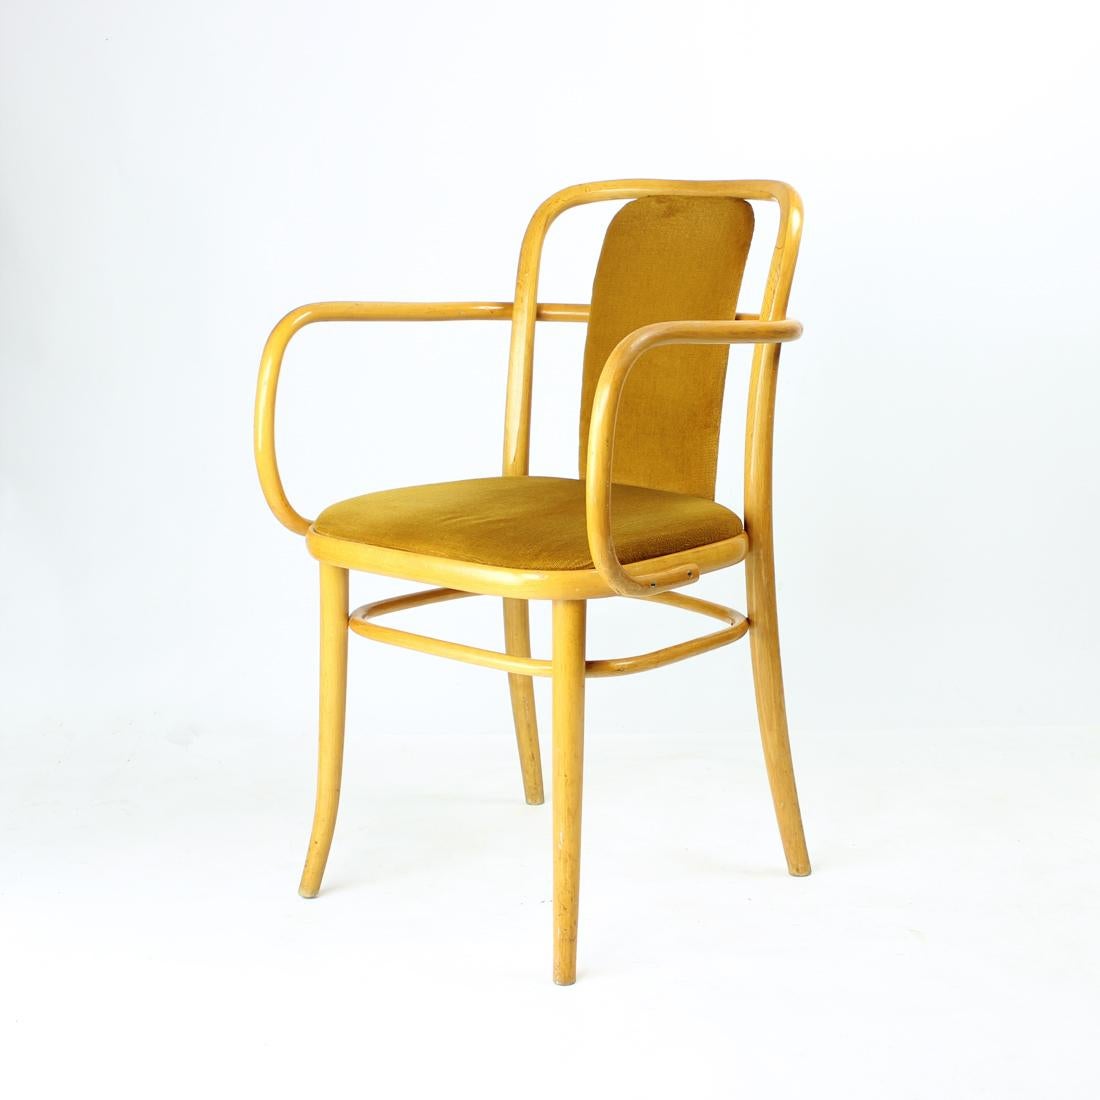 Bauhaus Ton Bentwood Armchair With Gold Velvet, Czechoslovakia 1930s, 40 Available For Sale